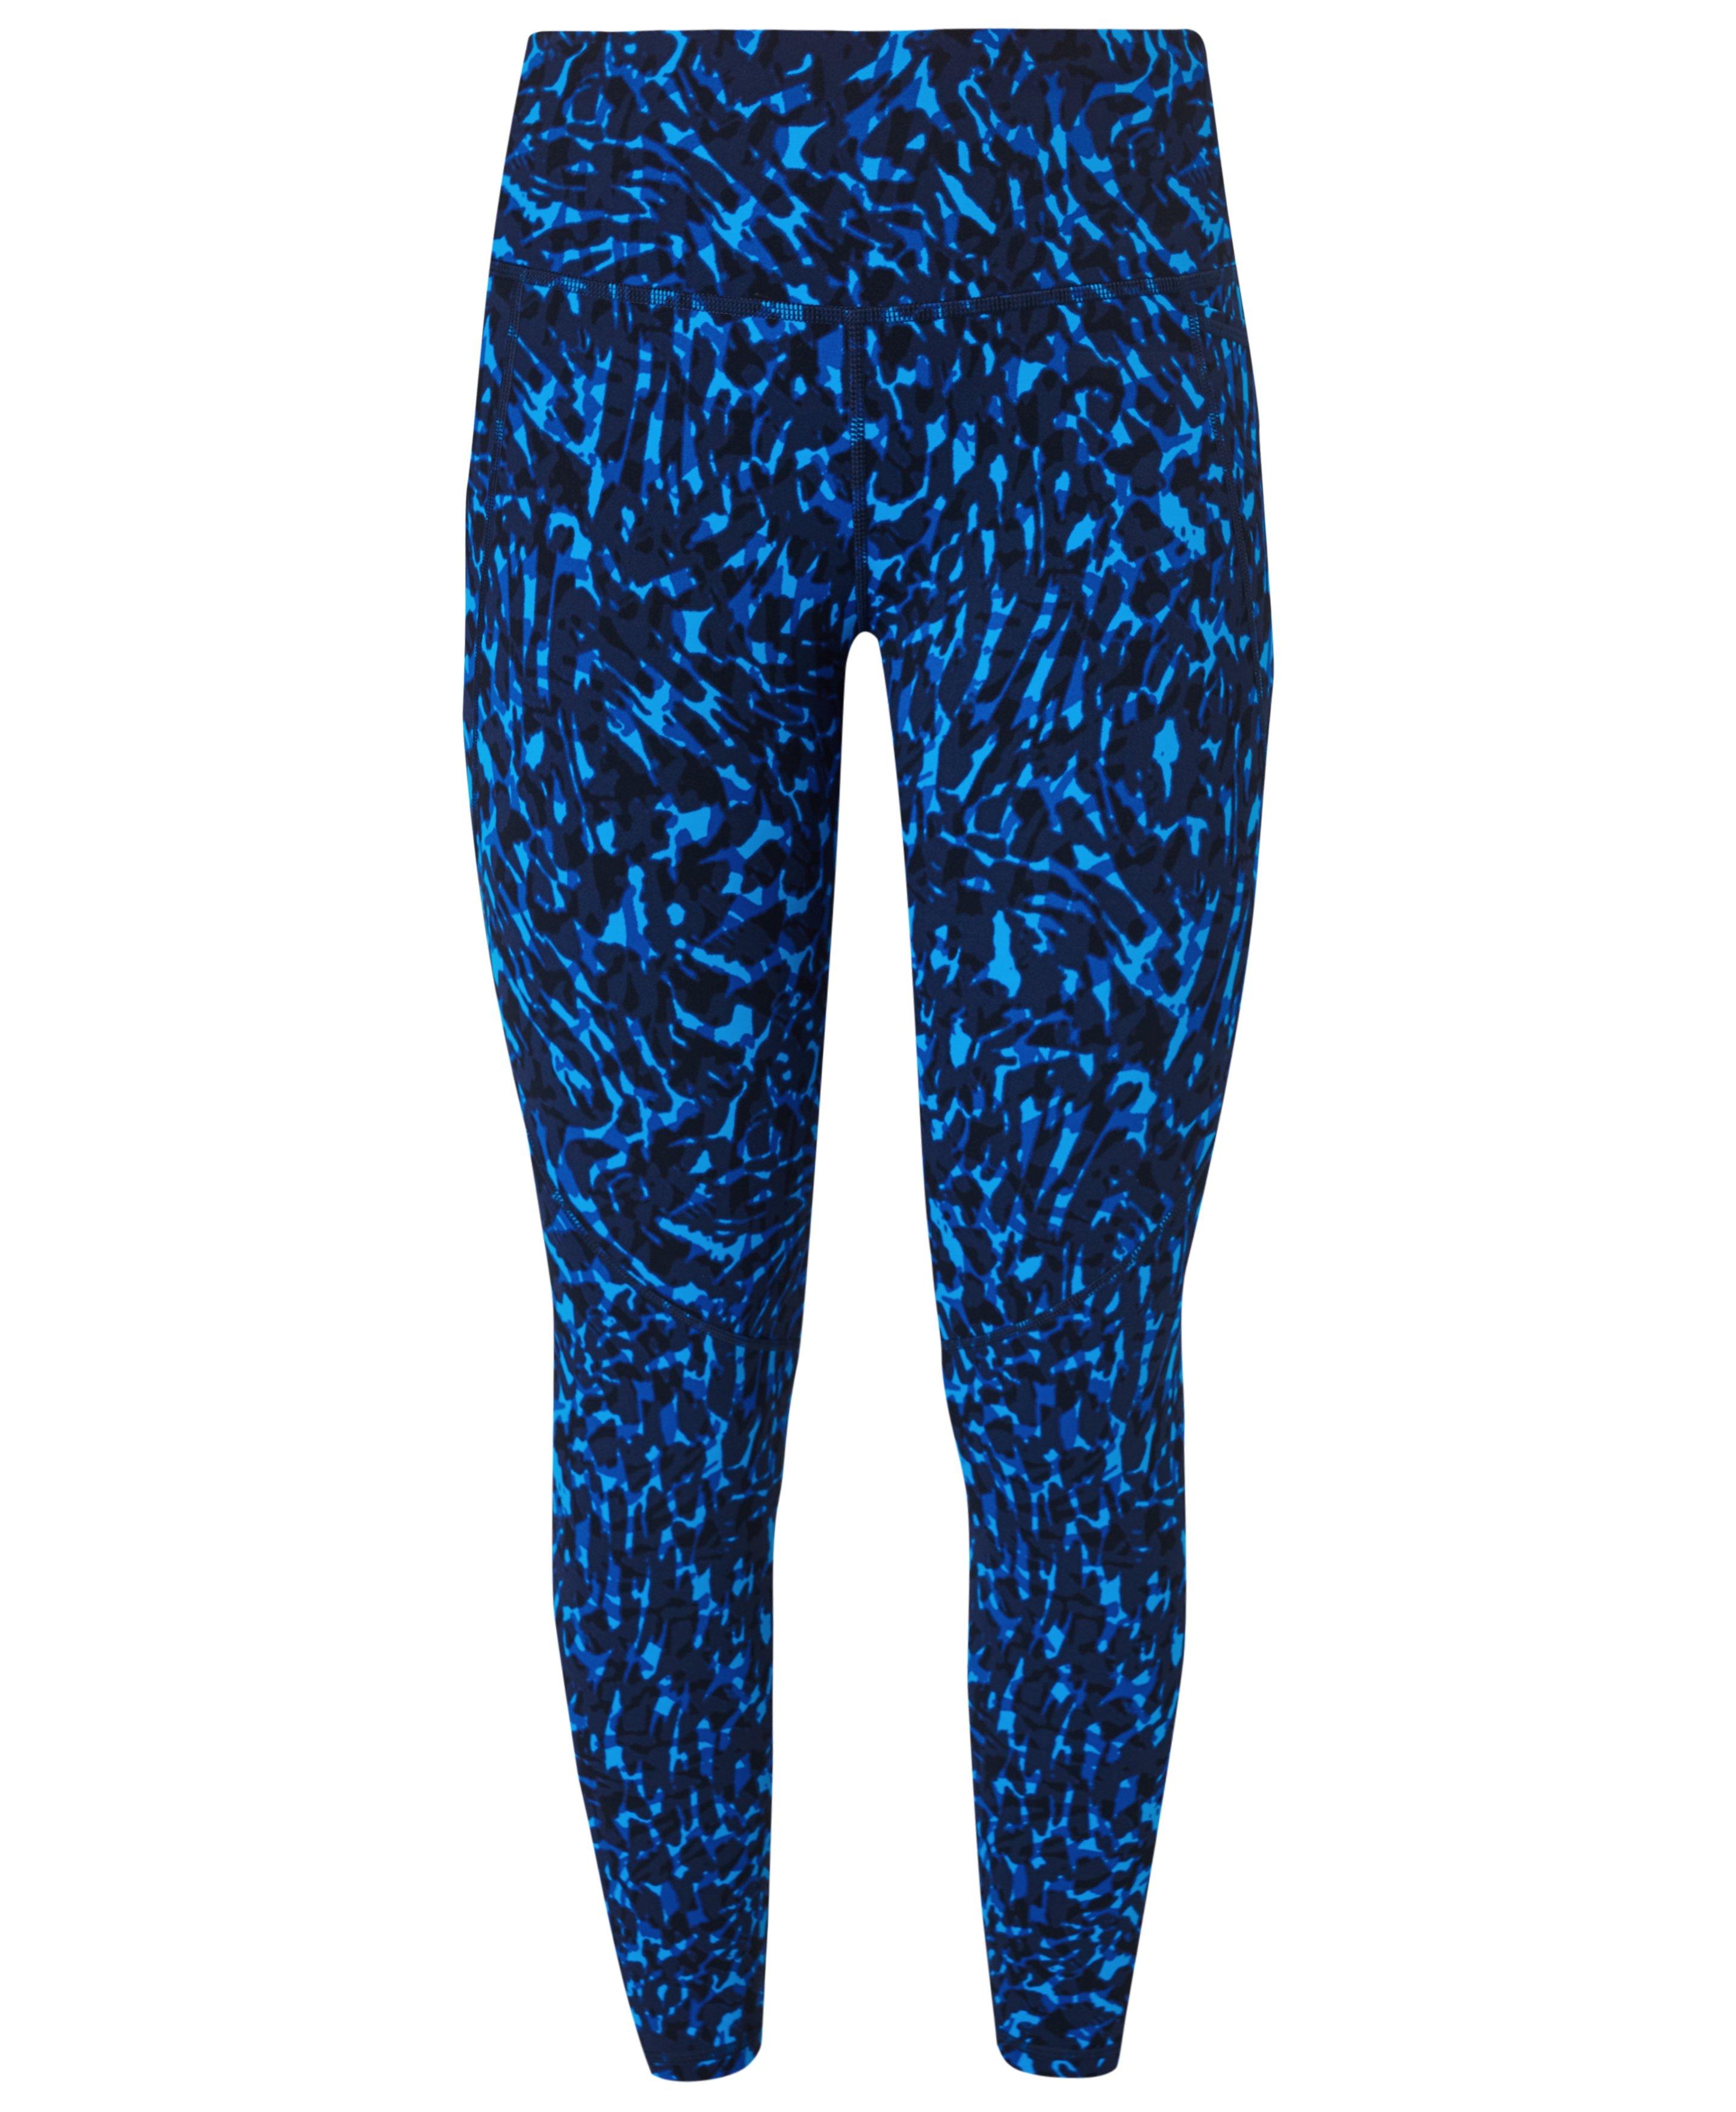 Power 7/8 Workout Leggings - Blue Animal Swirl Print